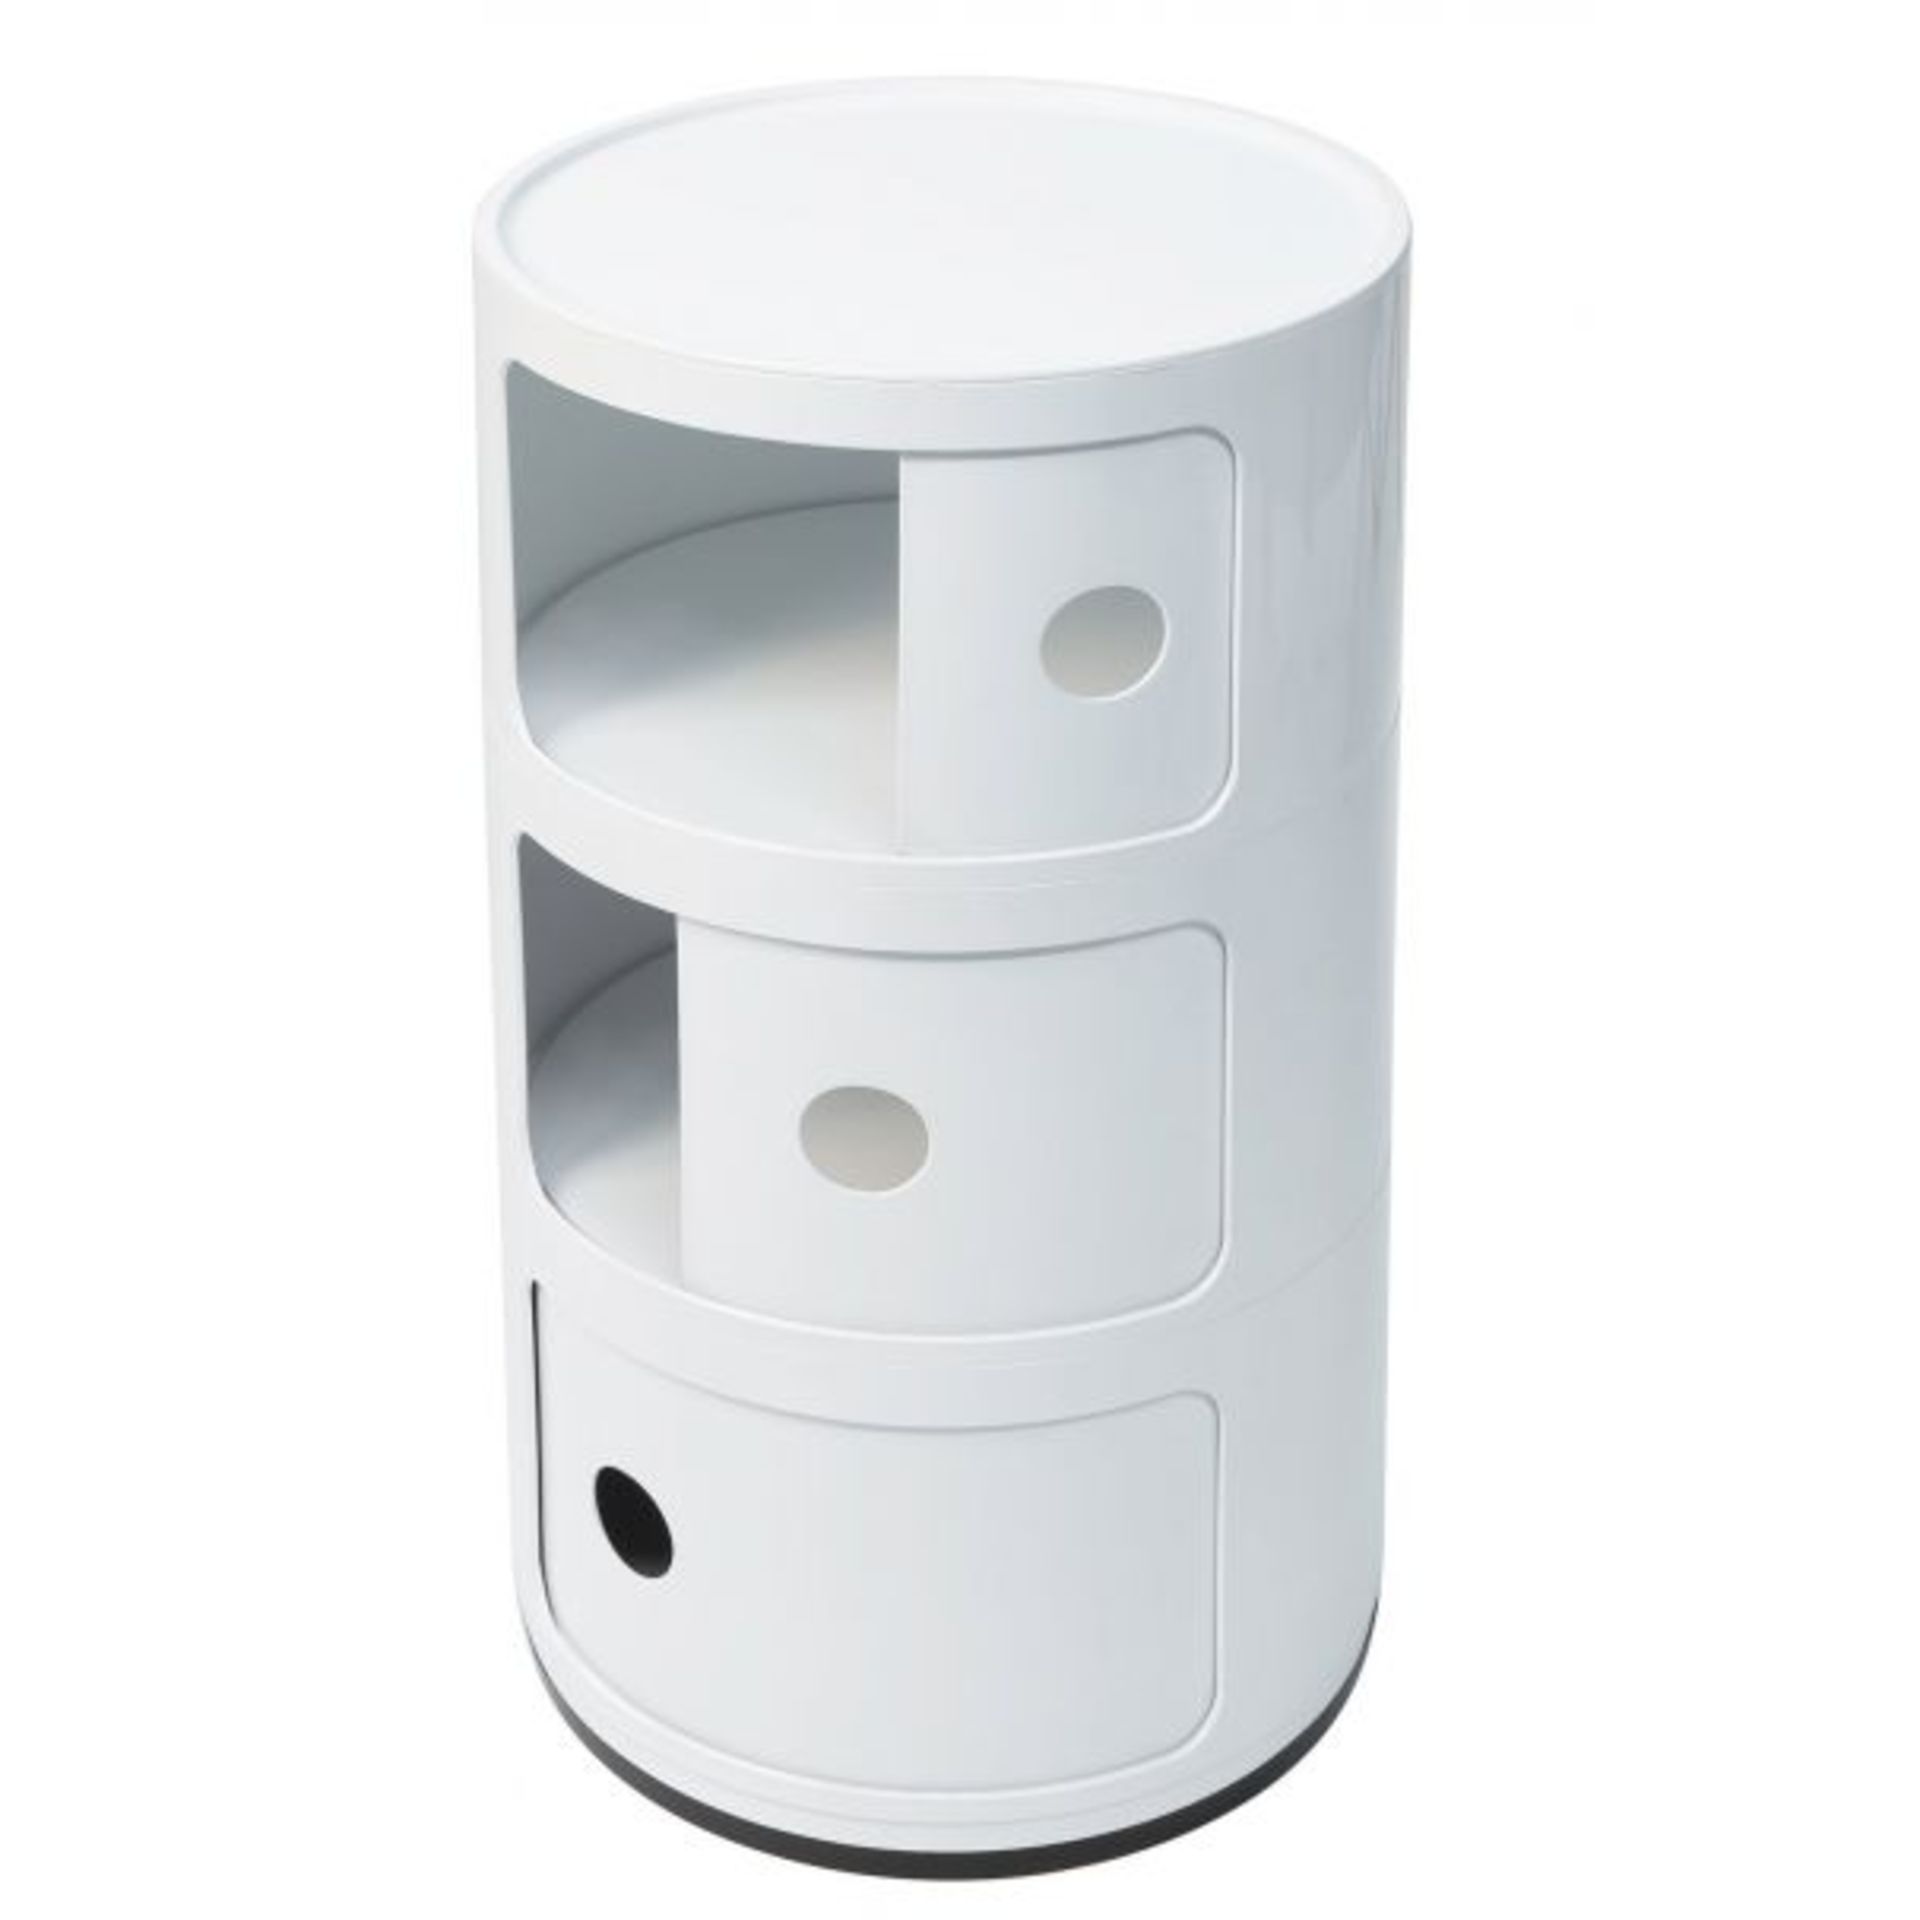 1 x 3 Tier Componibili Storage Unit White - Dimensions: 32(w) x 32(d) x 60(h) cm - Brand New Boxed S - Image 2 of 6